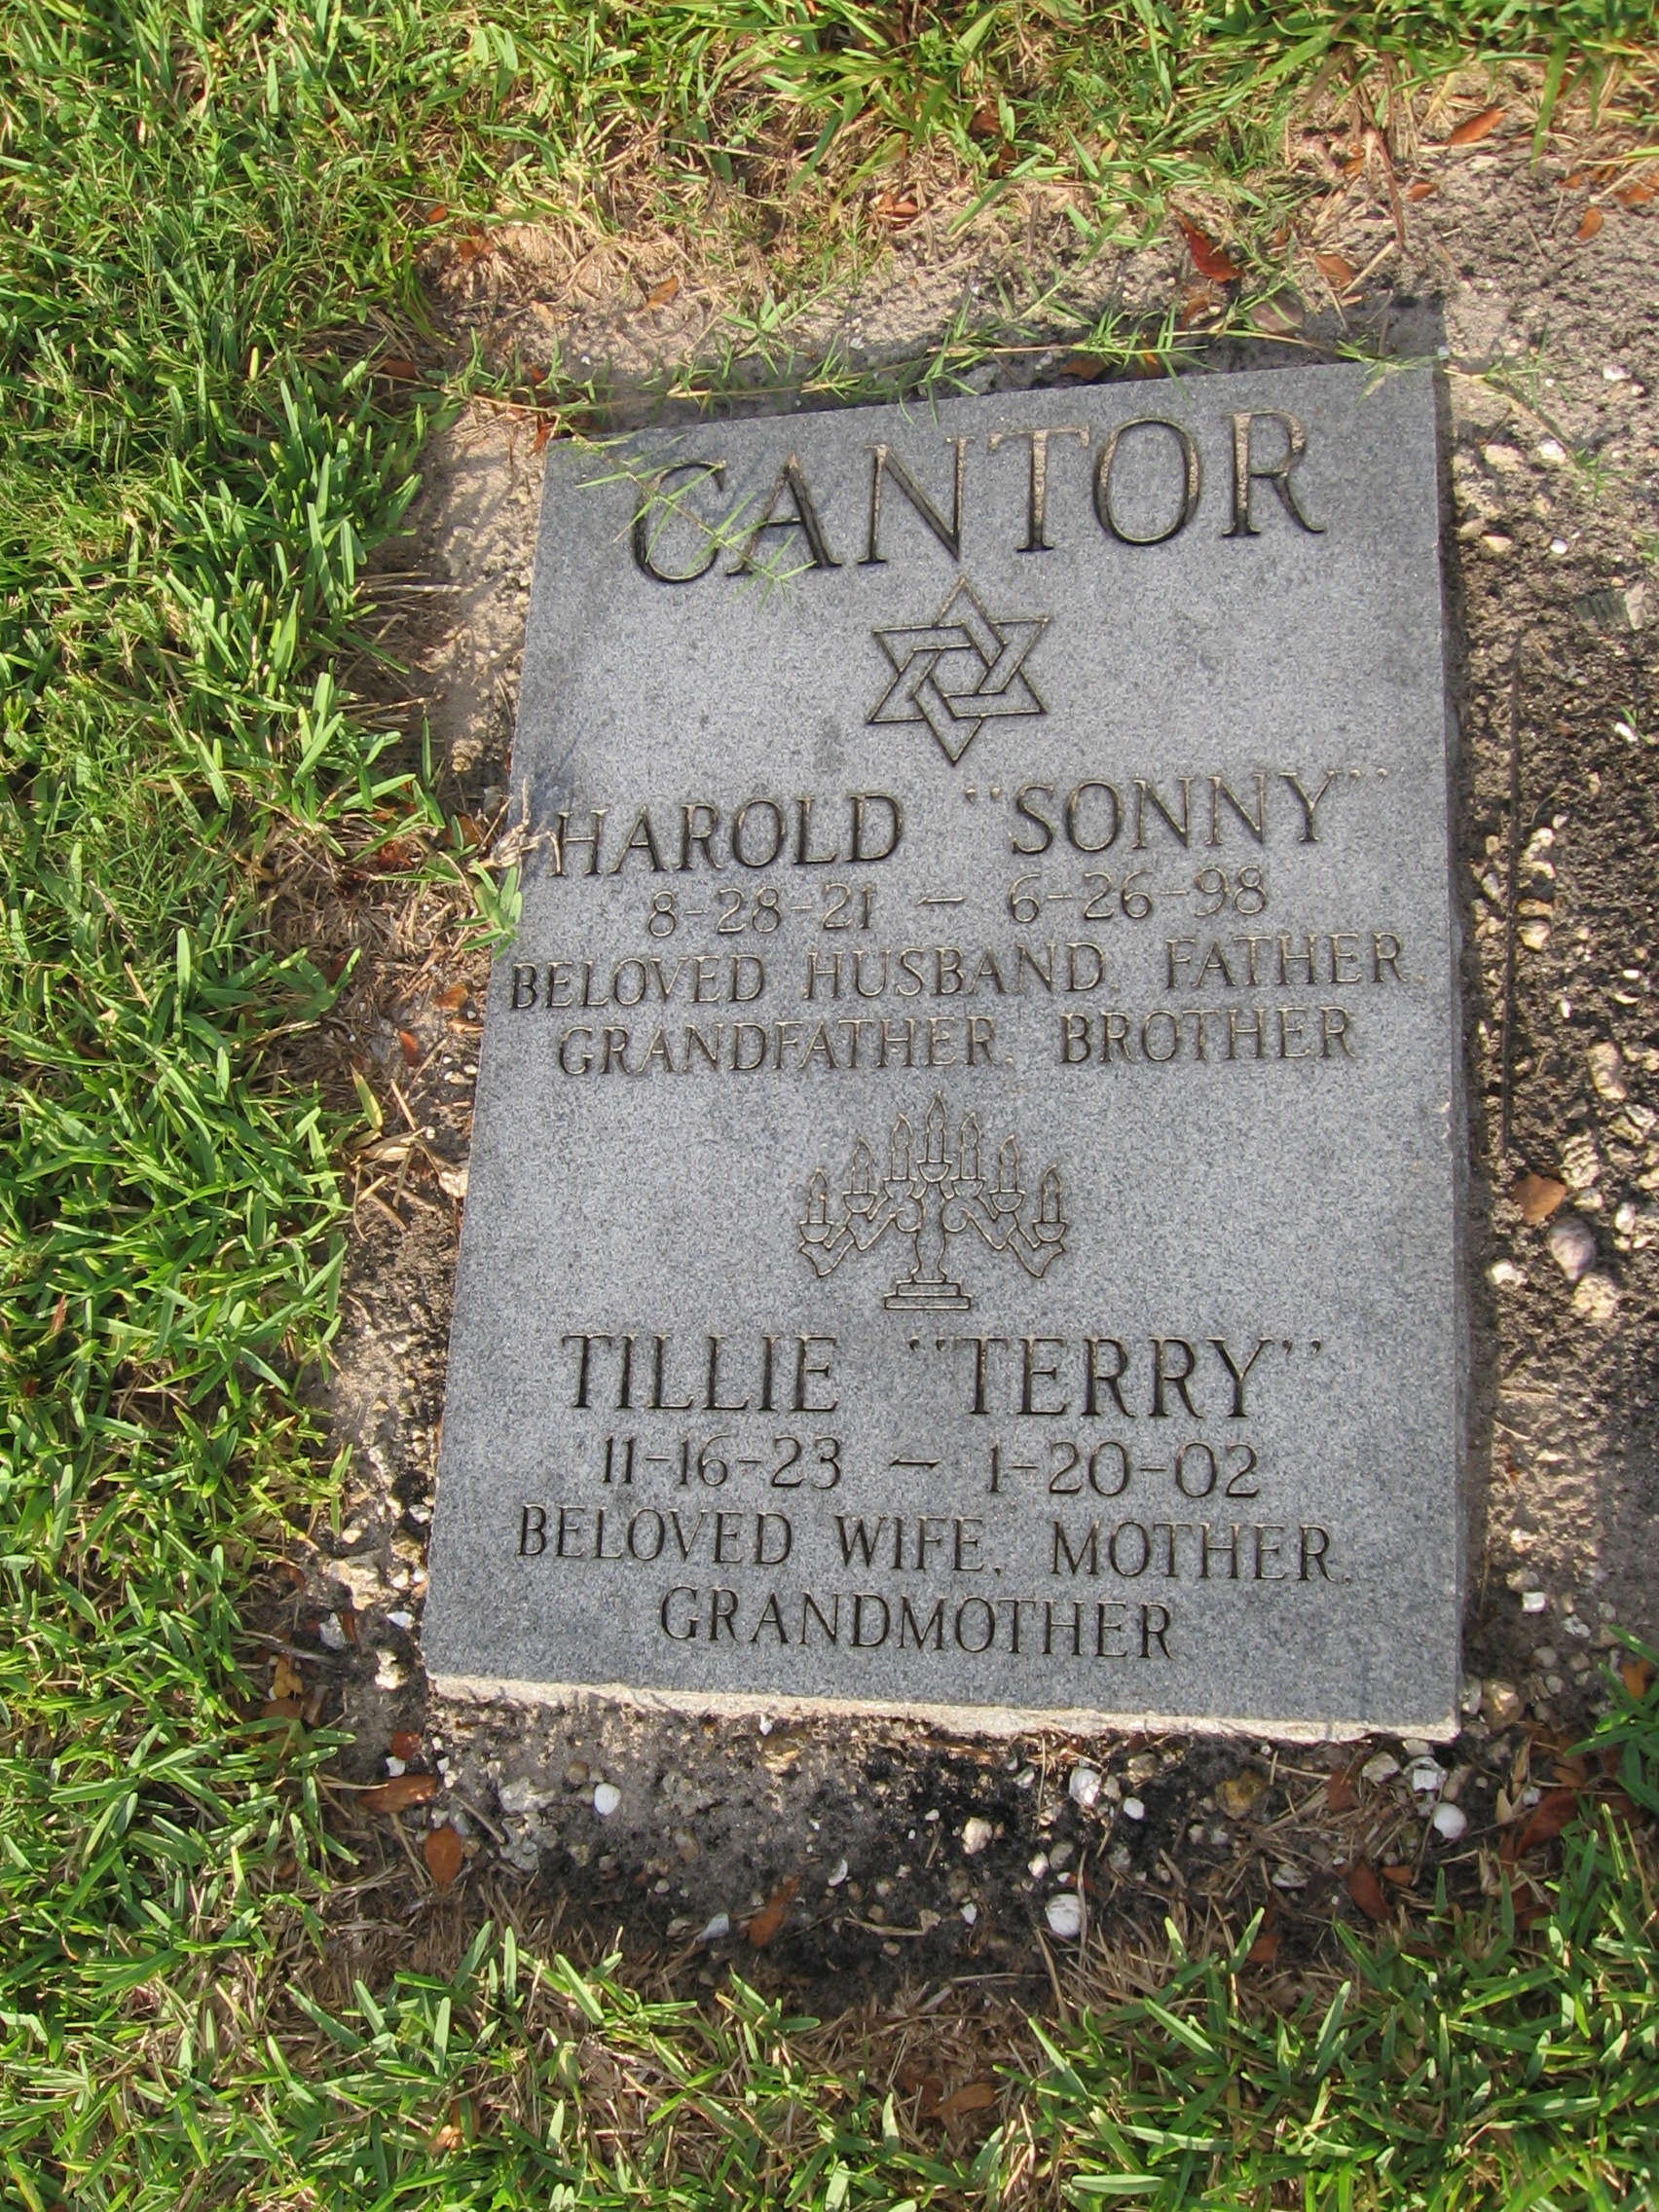 Harold "Sonny" Cantor